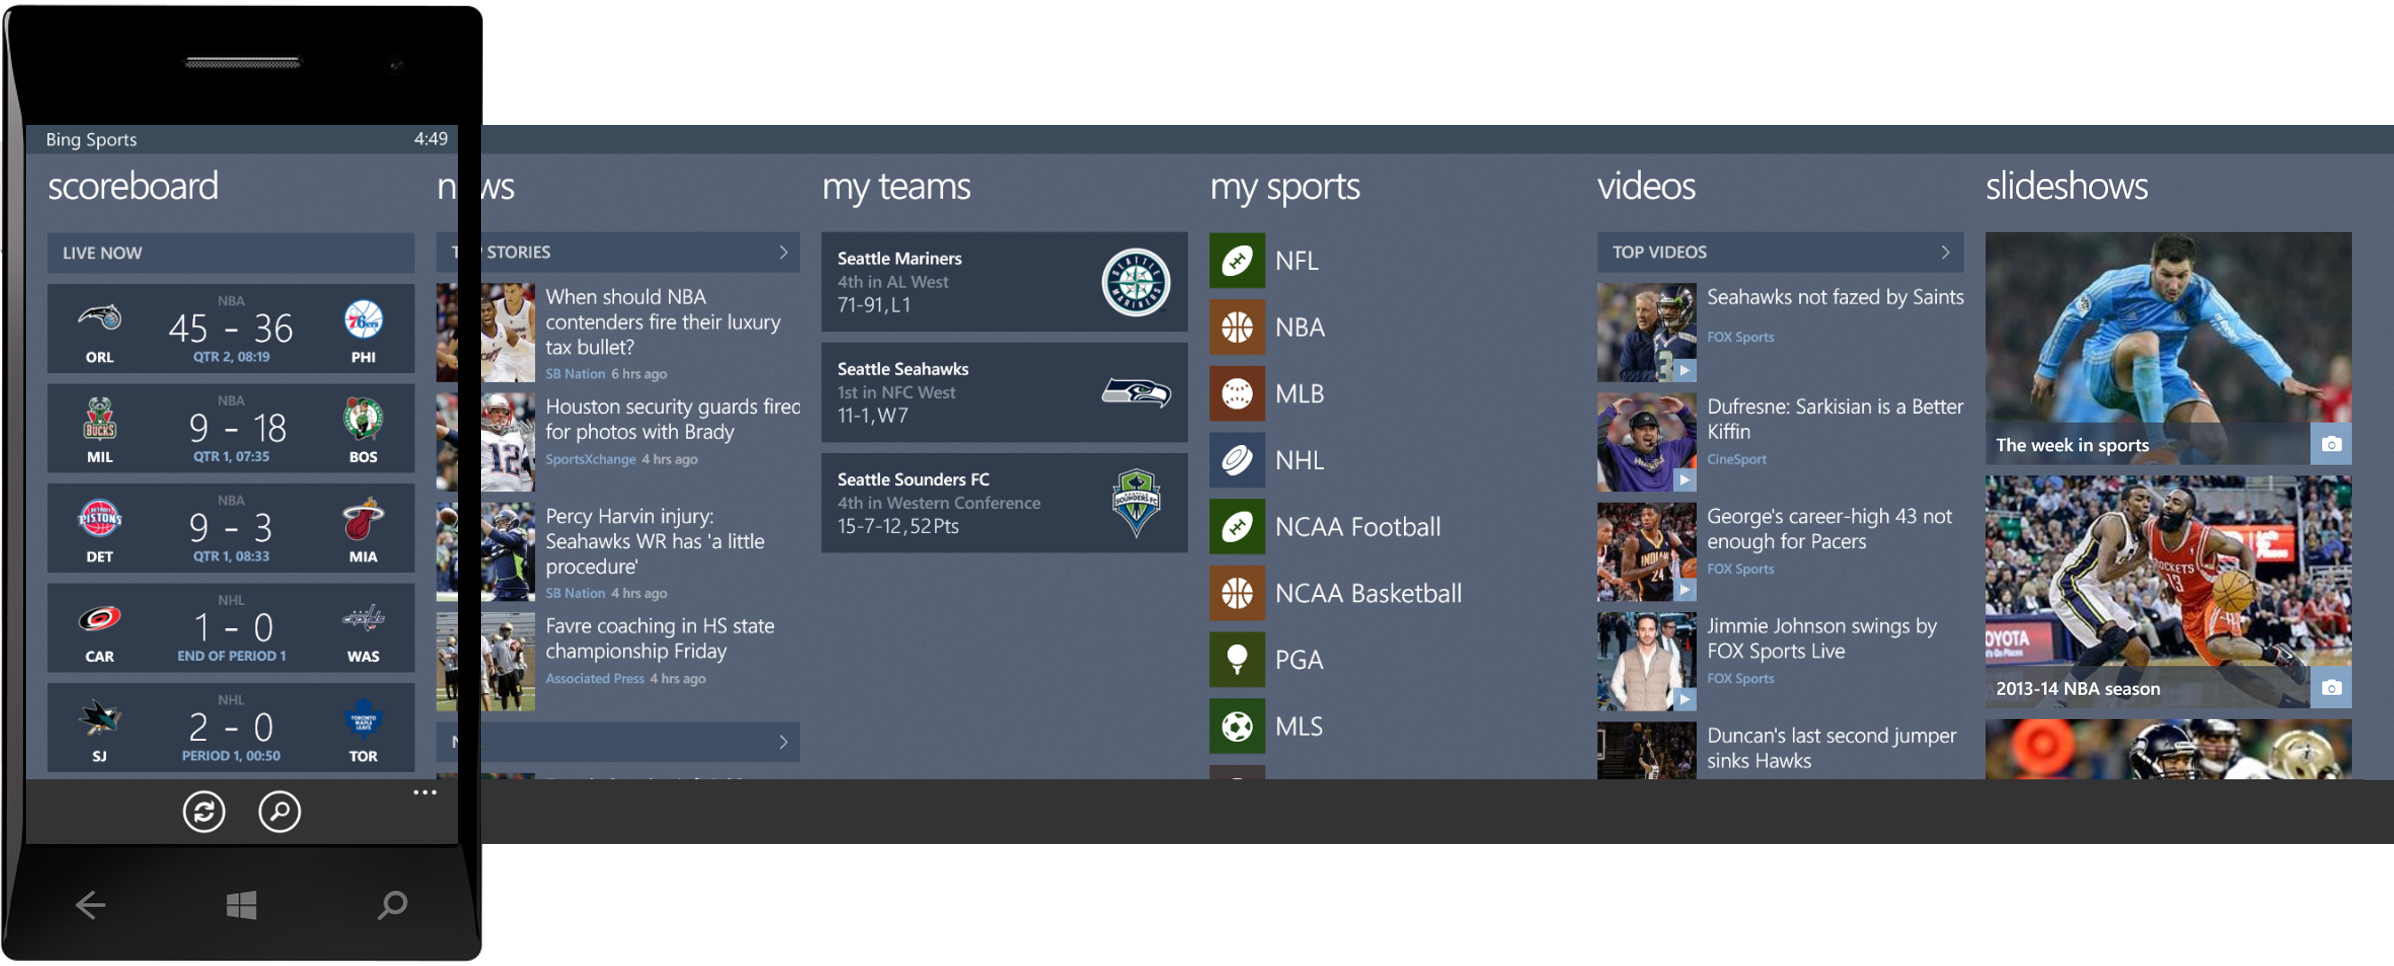 MSN/Bing Sports for Windows Phone 8 - Yoon Park - Mixed Reality Designer